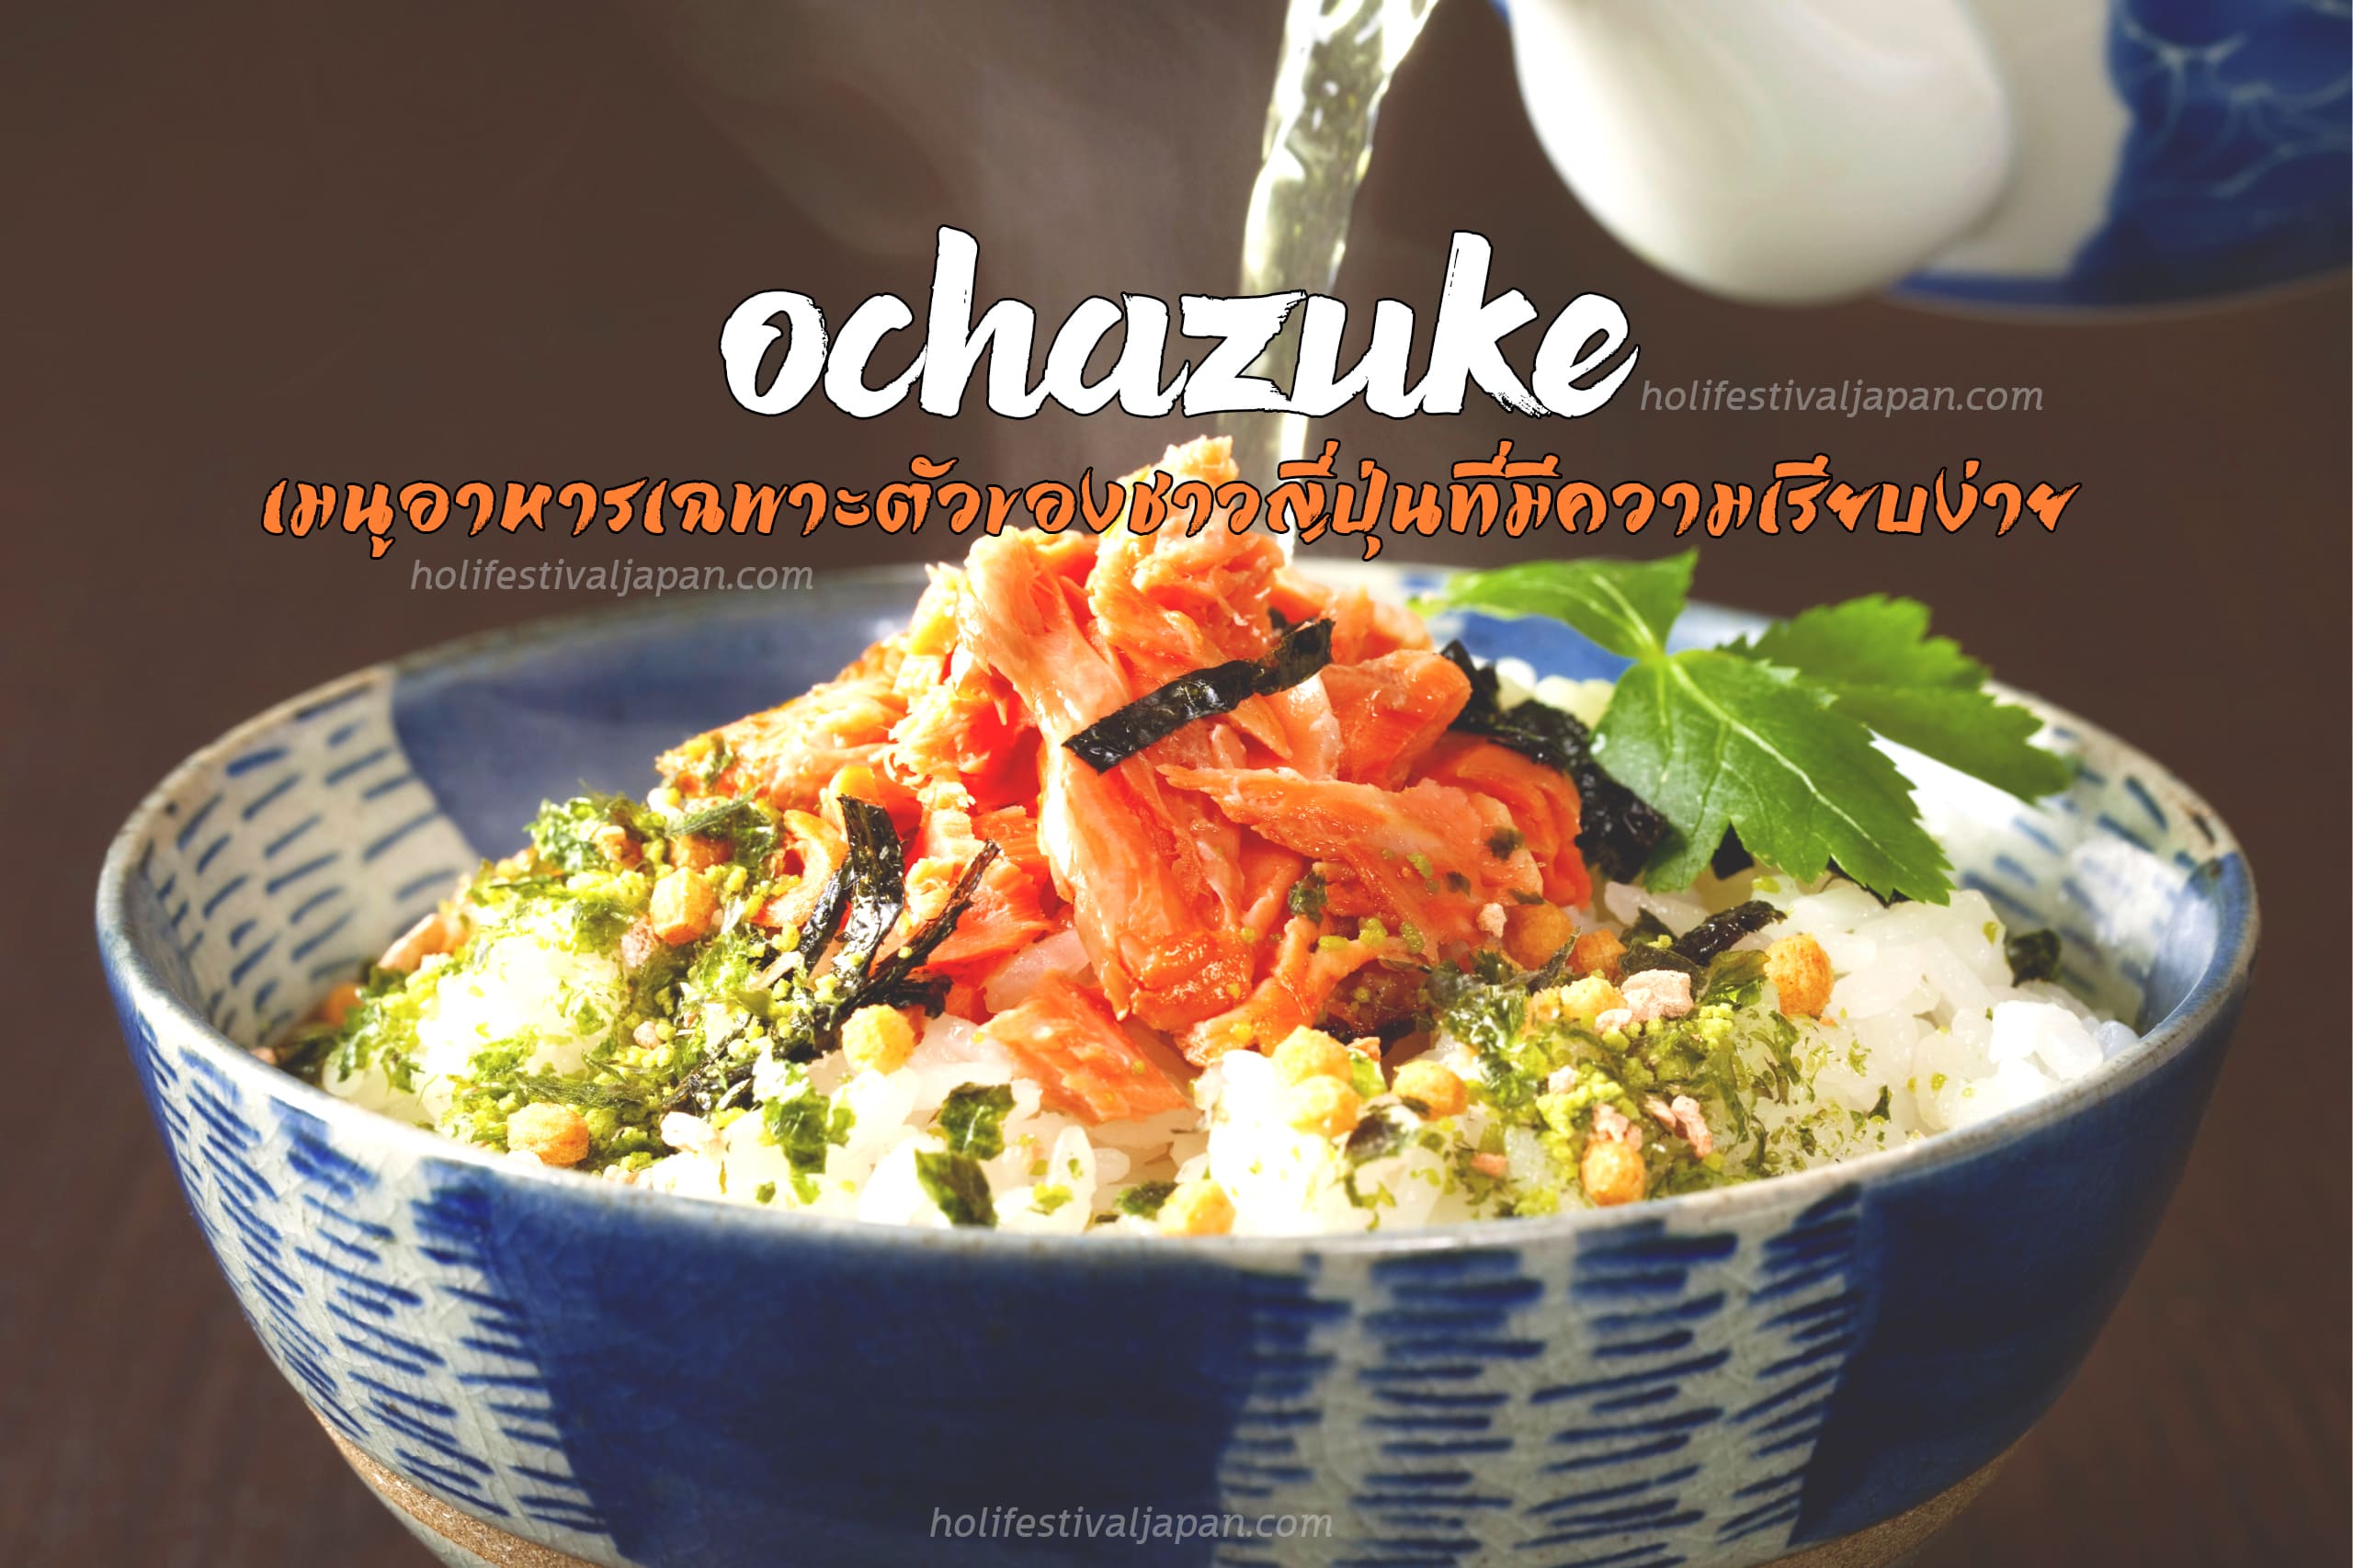 Ochazuke4 - Ochazuke เมนูอาหารเฉพาะตัวชาวญี่ปุ่นที่มีความเรียบง่าย อร่อย แปลกใหม่